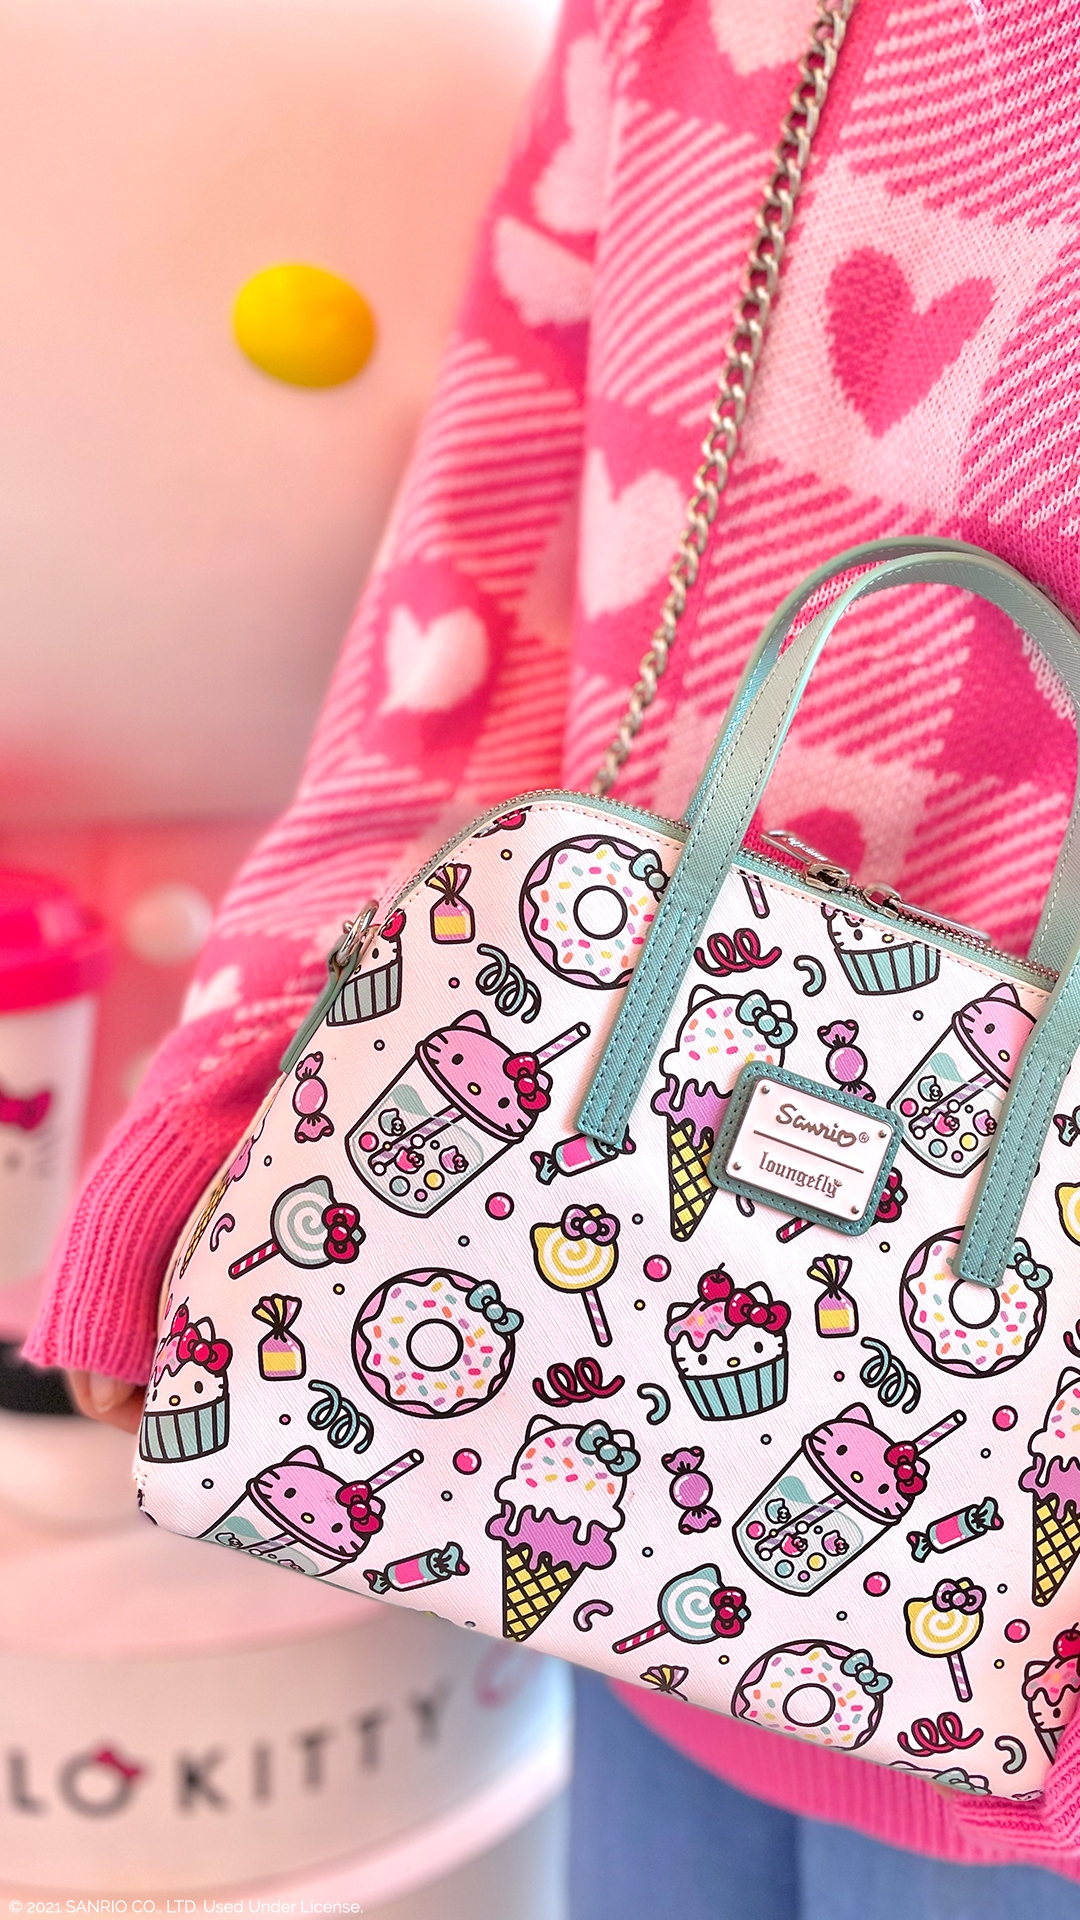 loungefly hello kitty purse pink